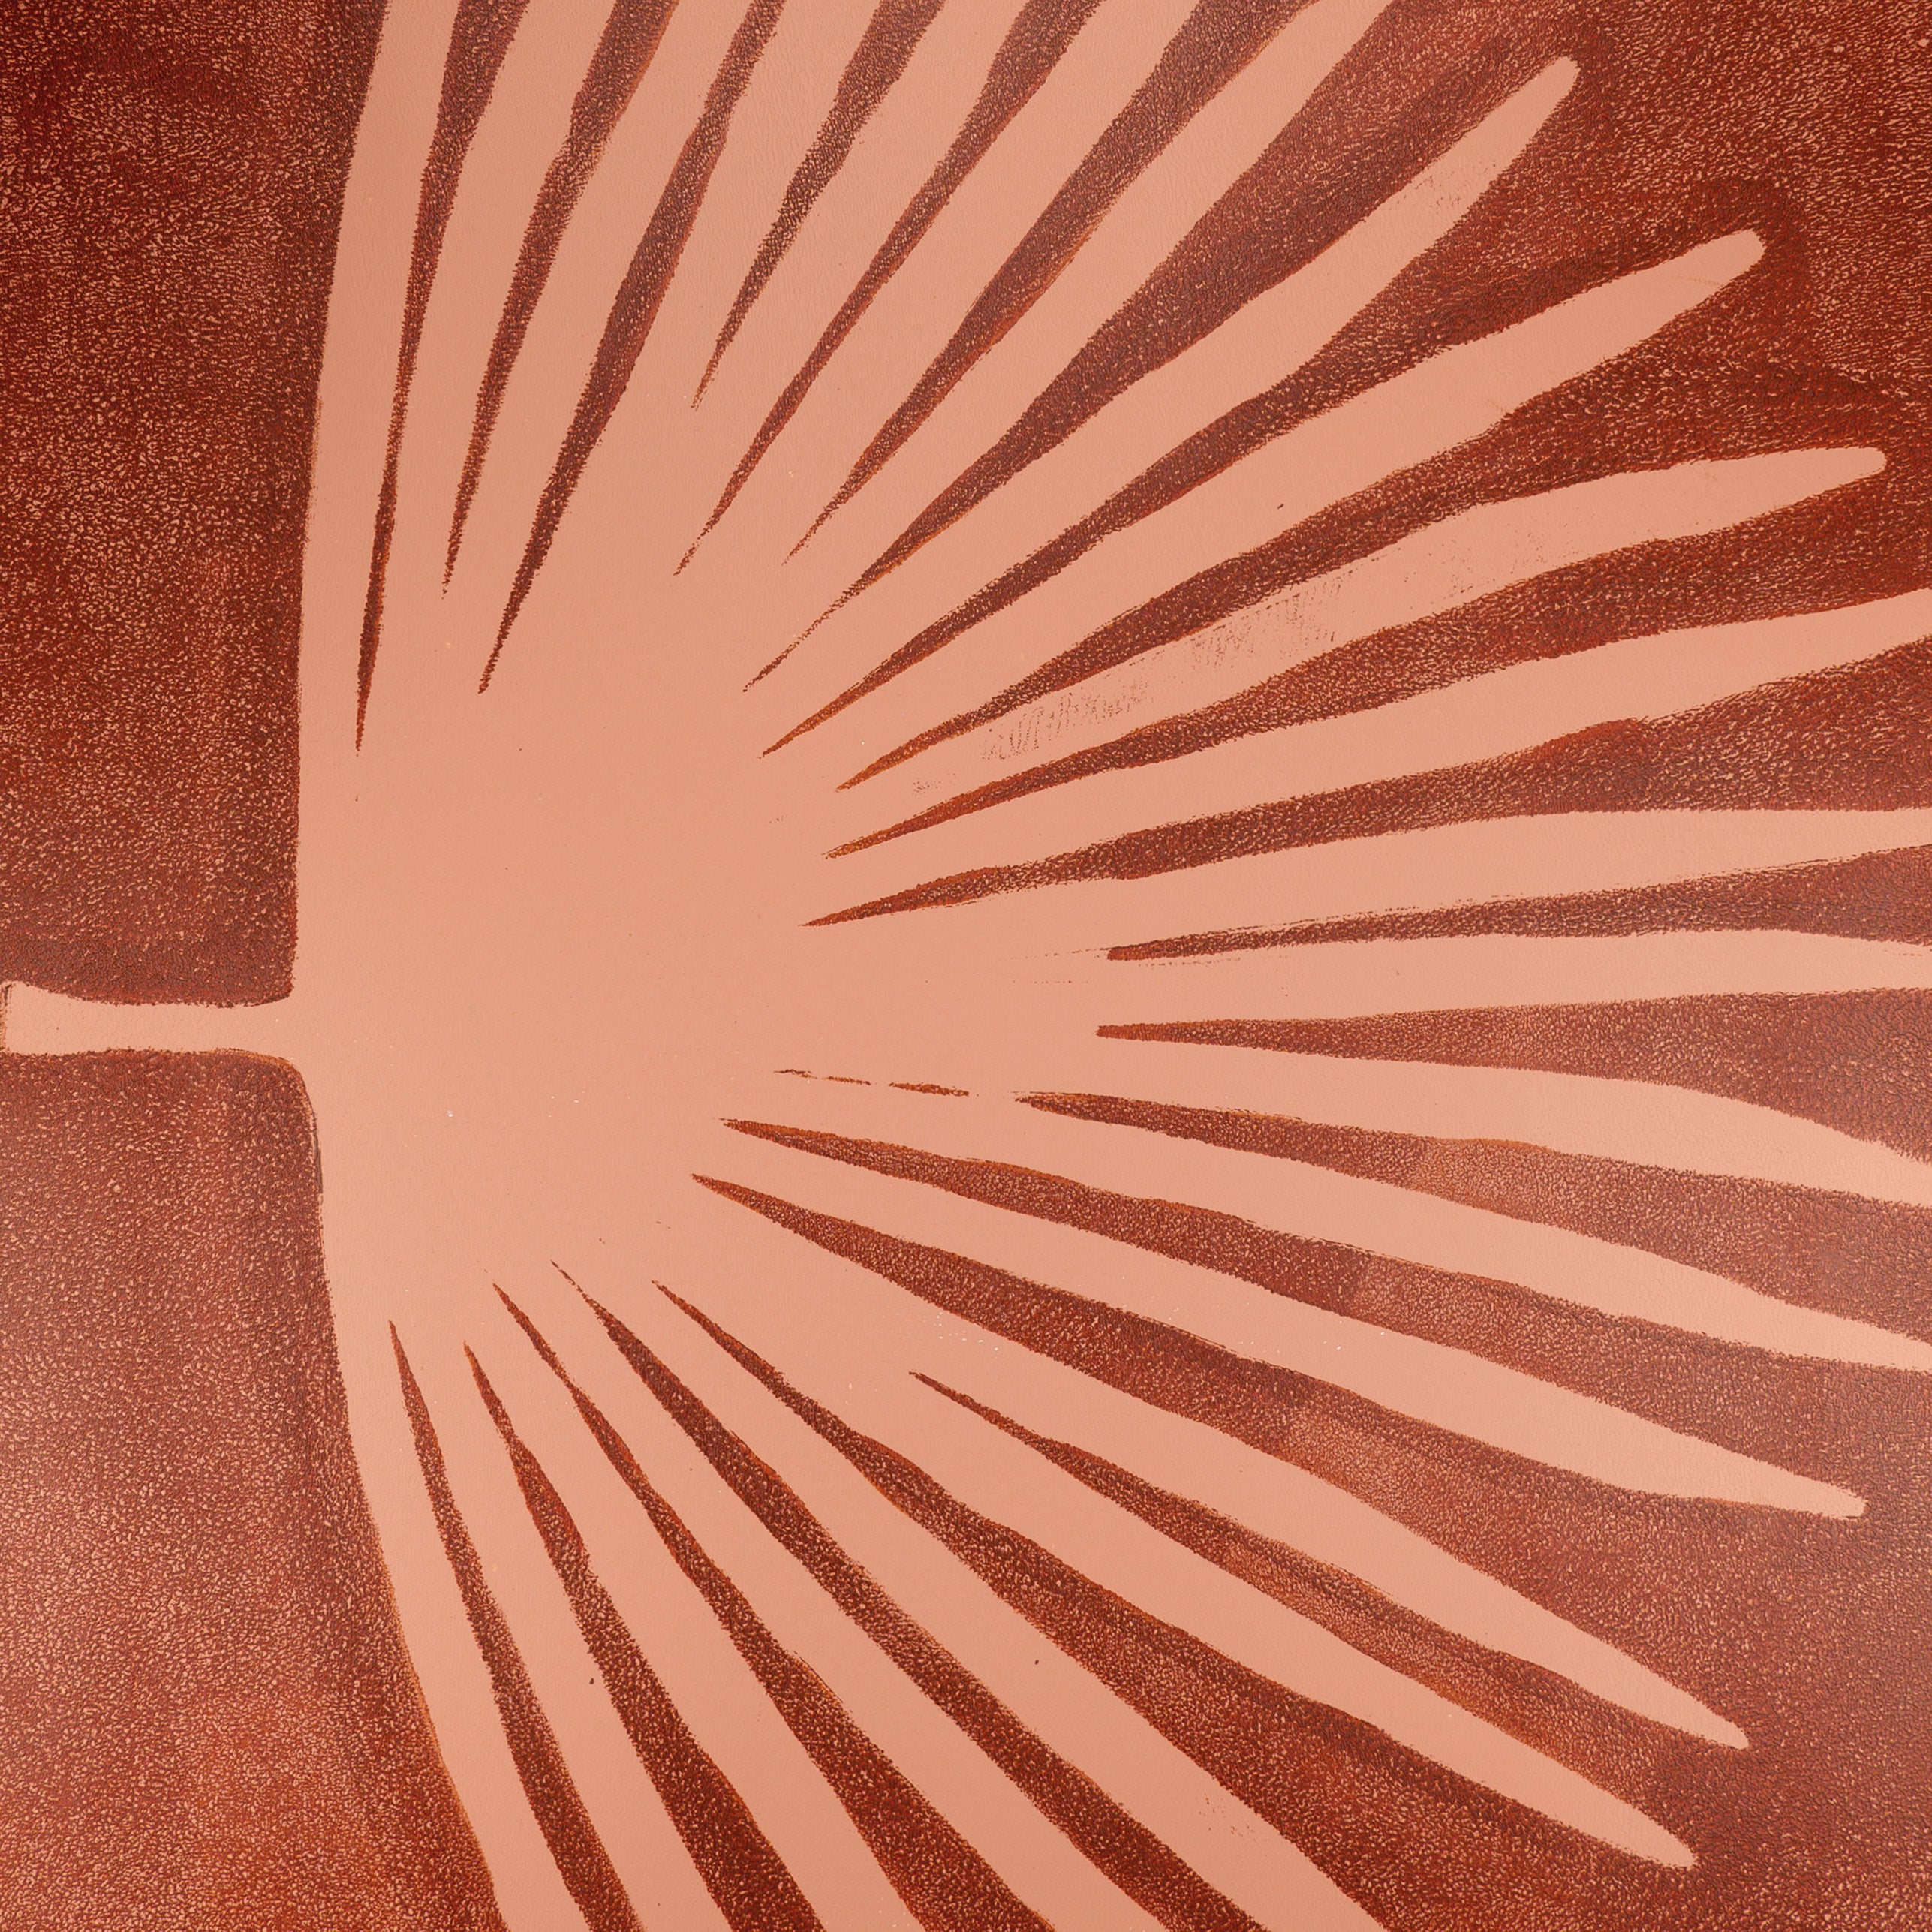 Terra and nude botanical print with palm branch I Handmade poster Enkel Art Studio